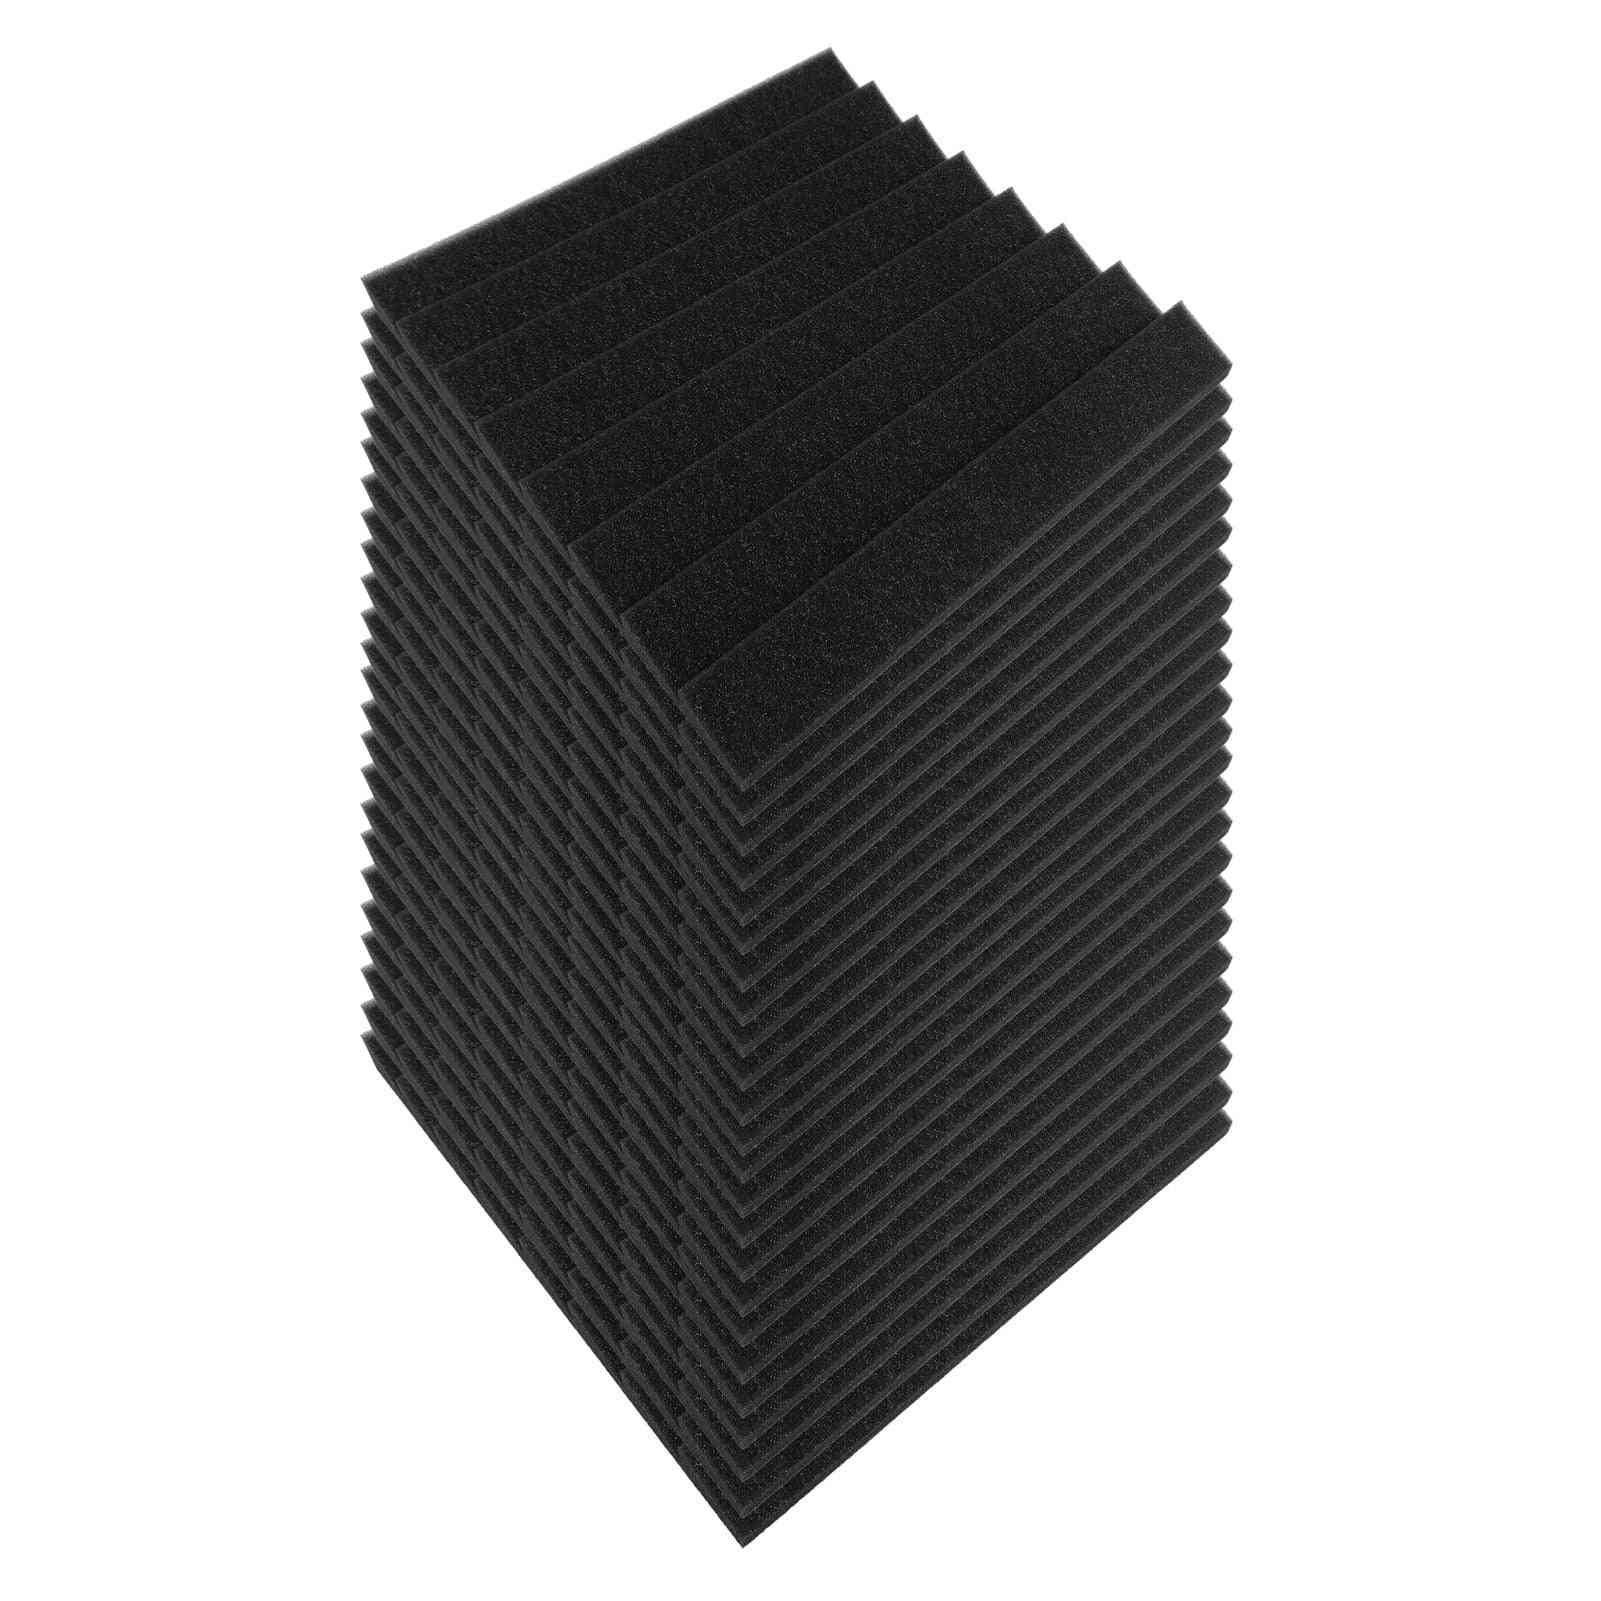 Studio Acoustic Foams Panels Sound Insulation, Soundproof, Absorbing Foam Wall Deadening Flame-retardant